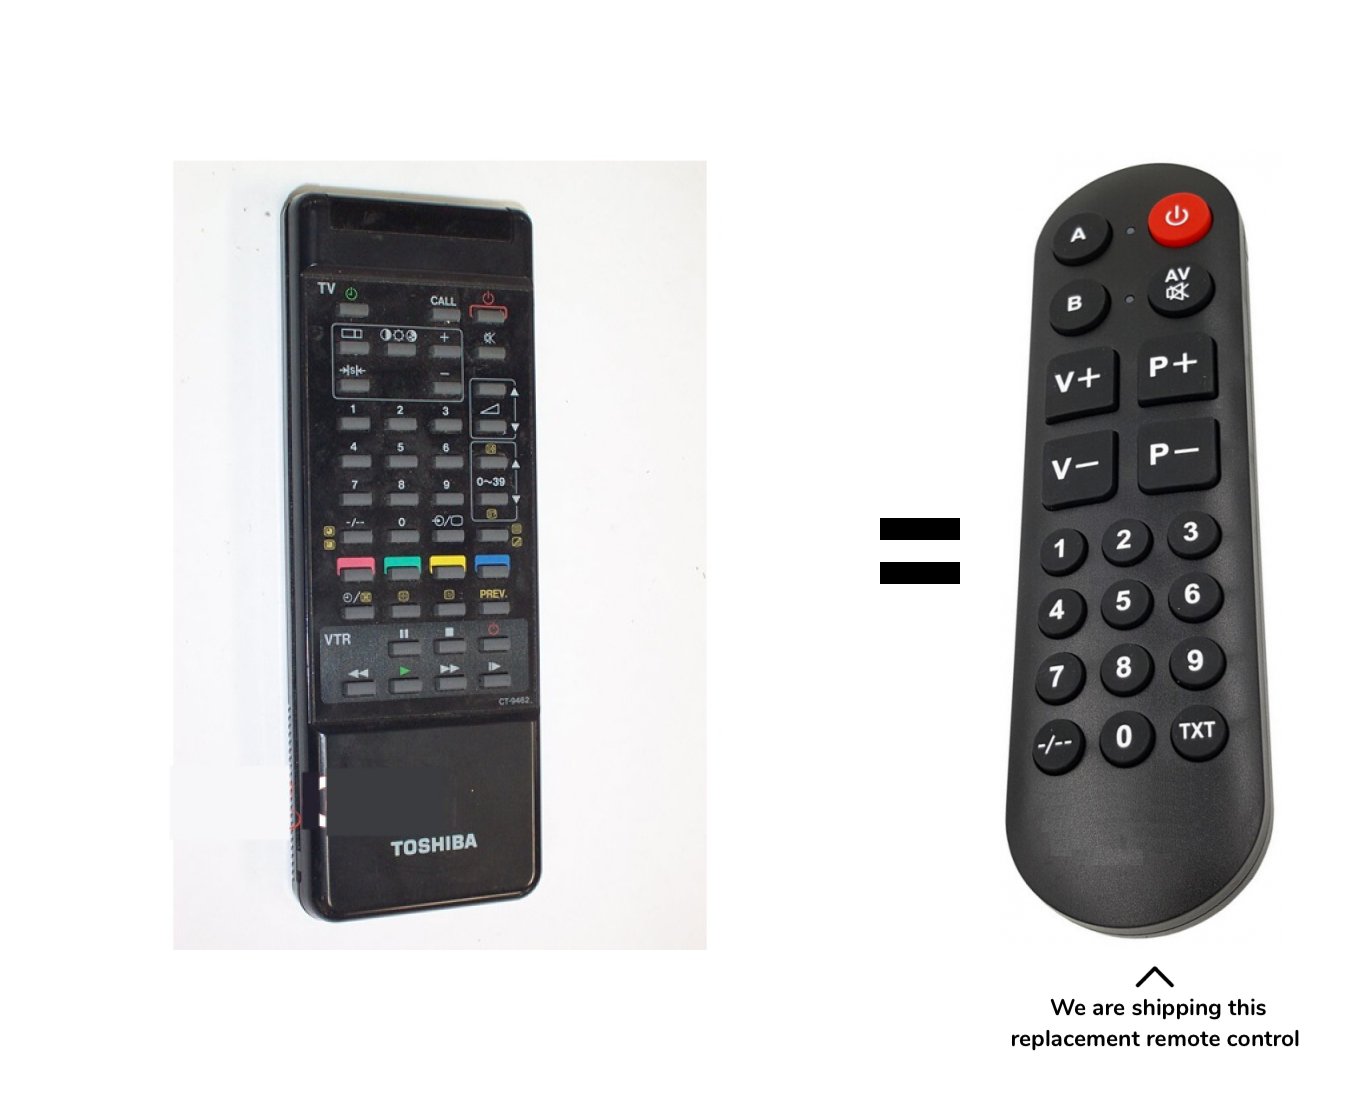 Toshiba CT-9455 remote control for seniors